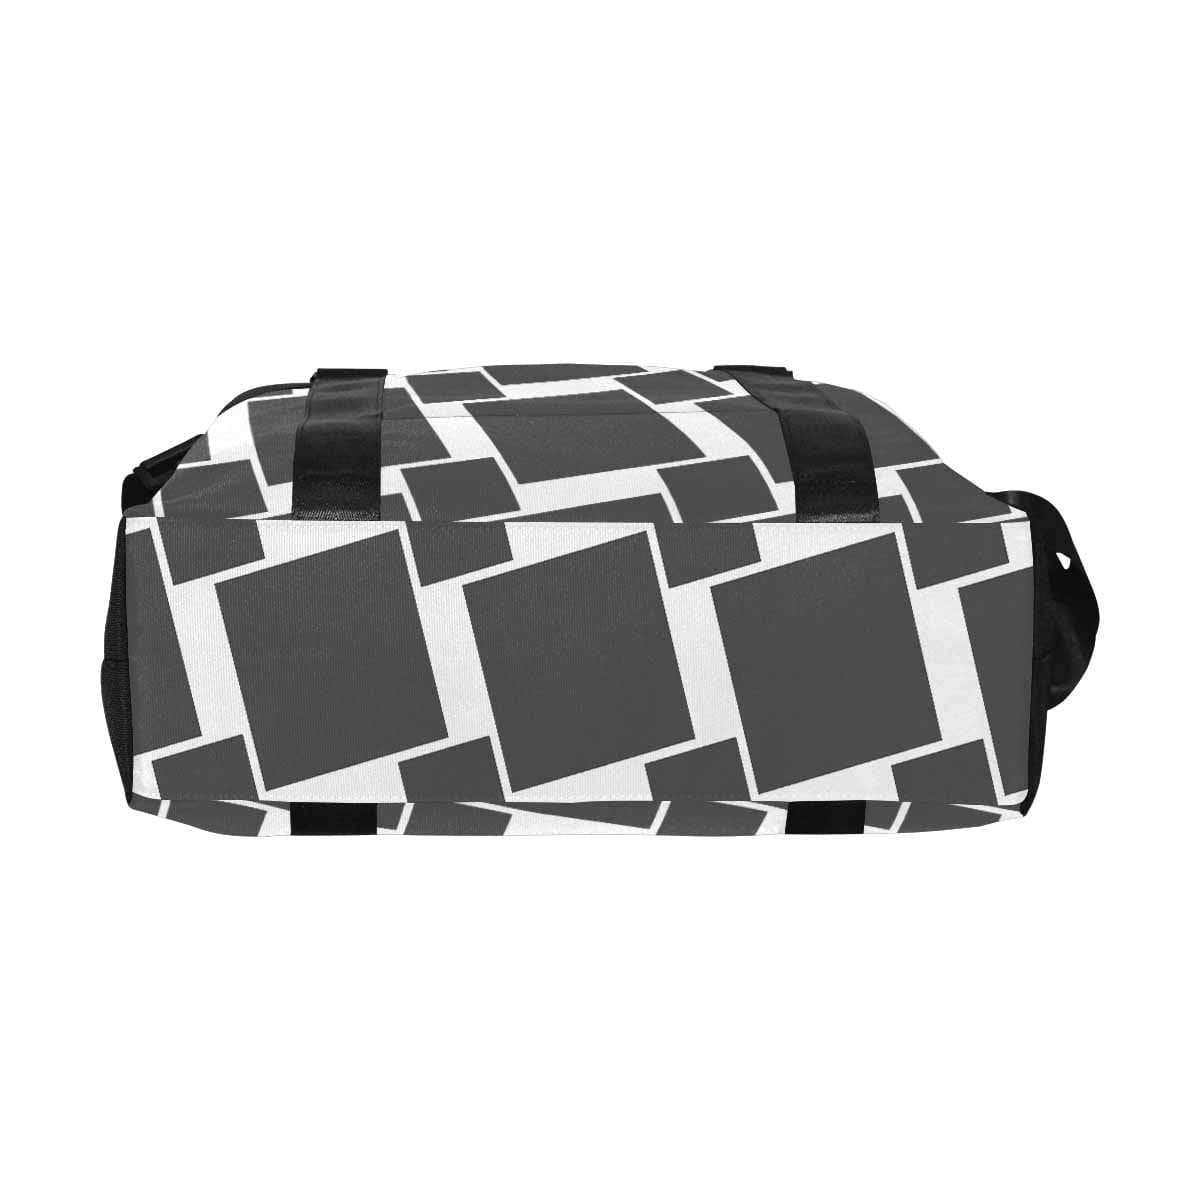 Duffle Bag - Large Capacity - Dark Grey - Bags | Travel Bags | Canvas Carry